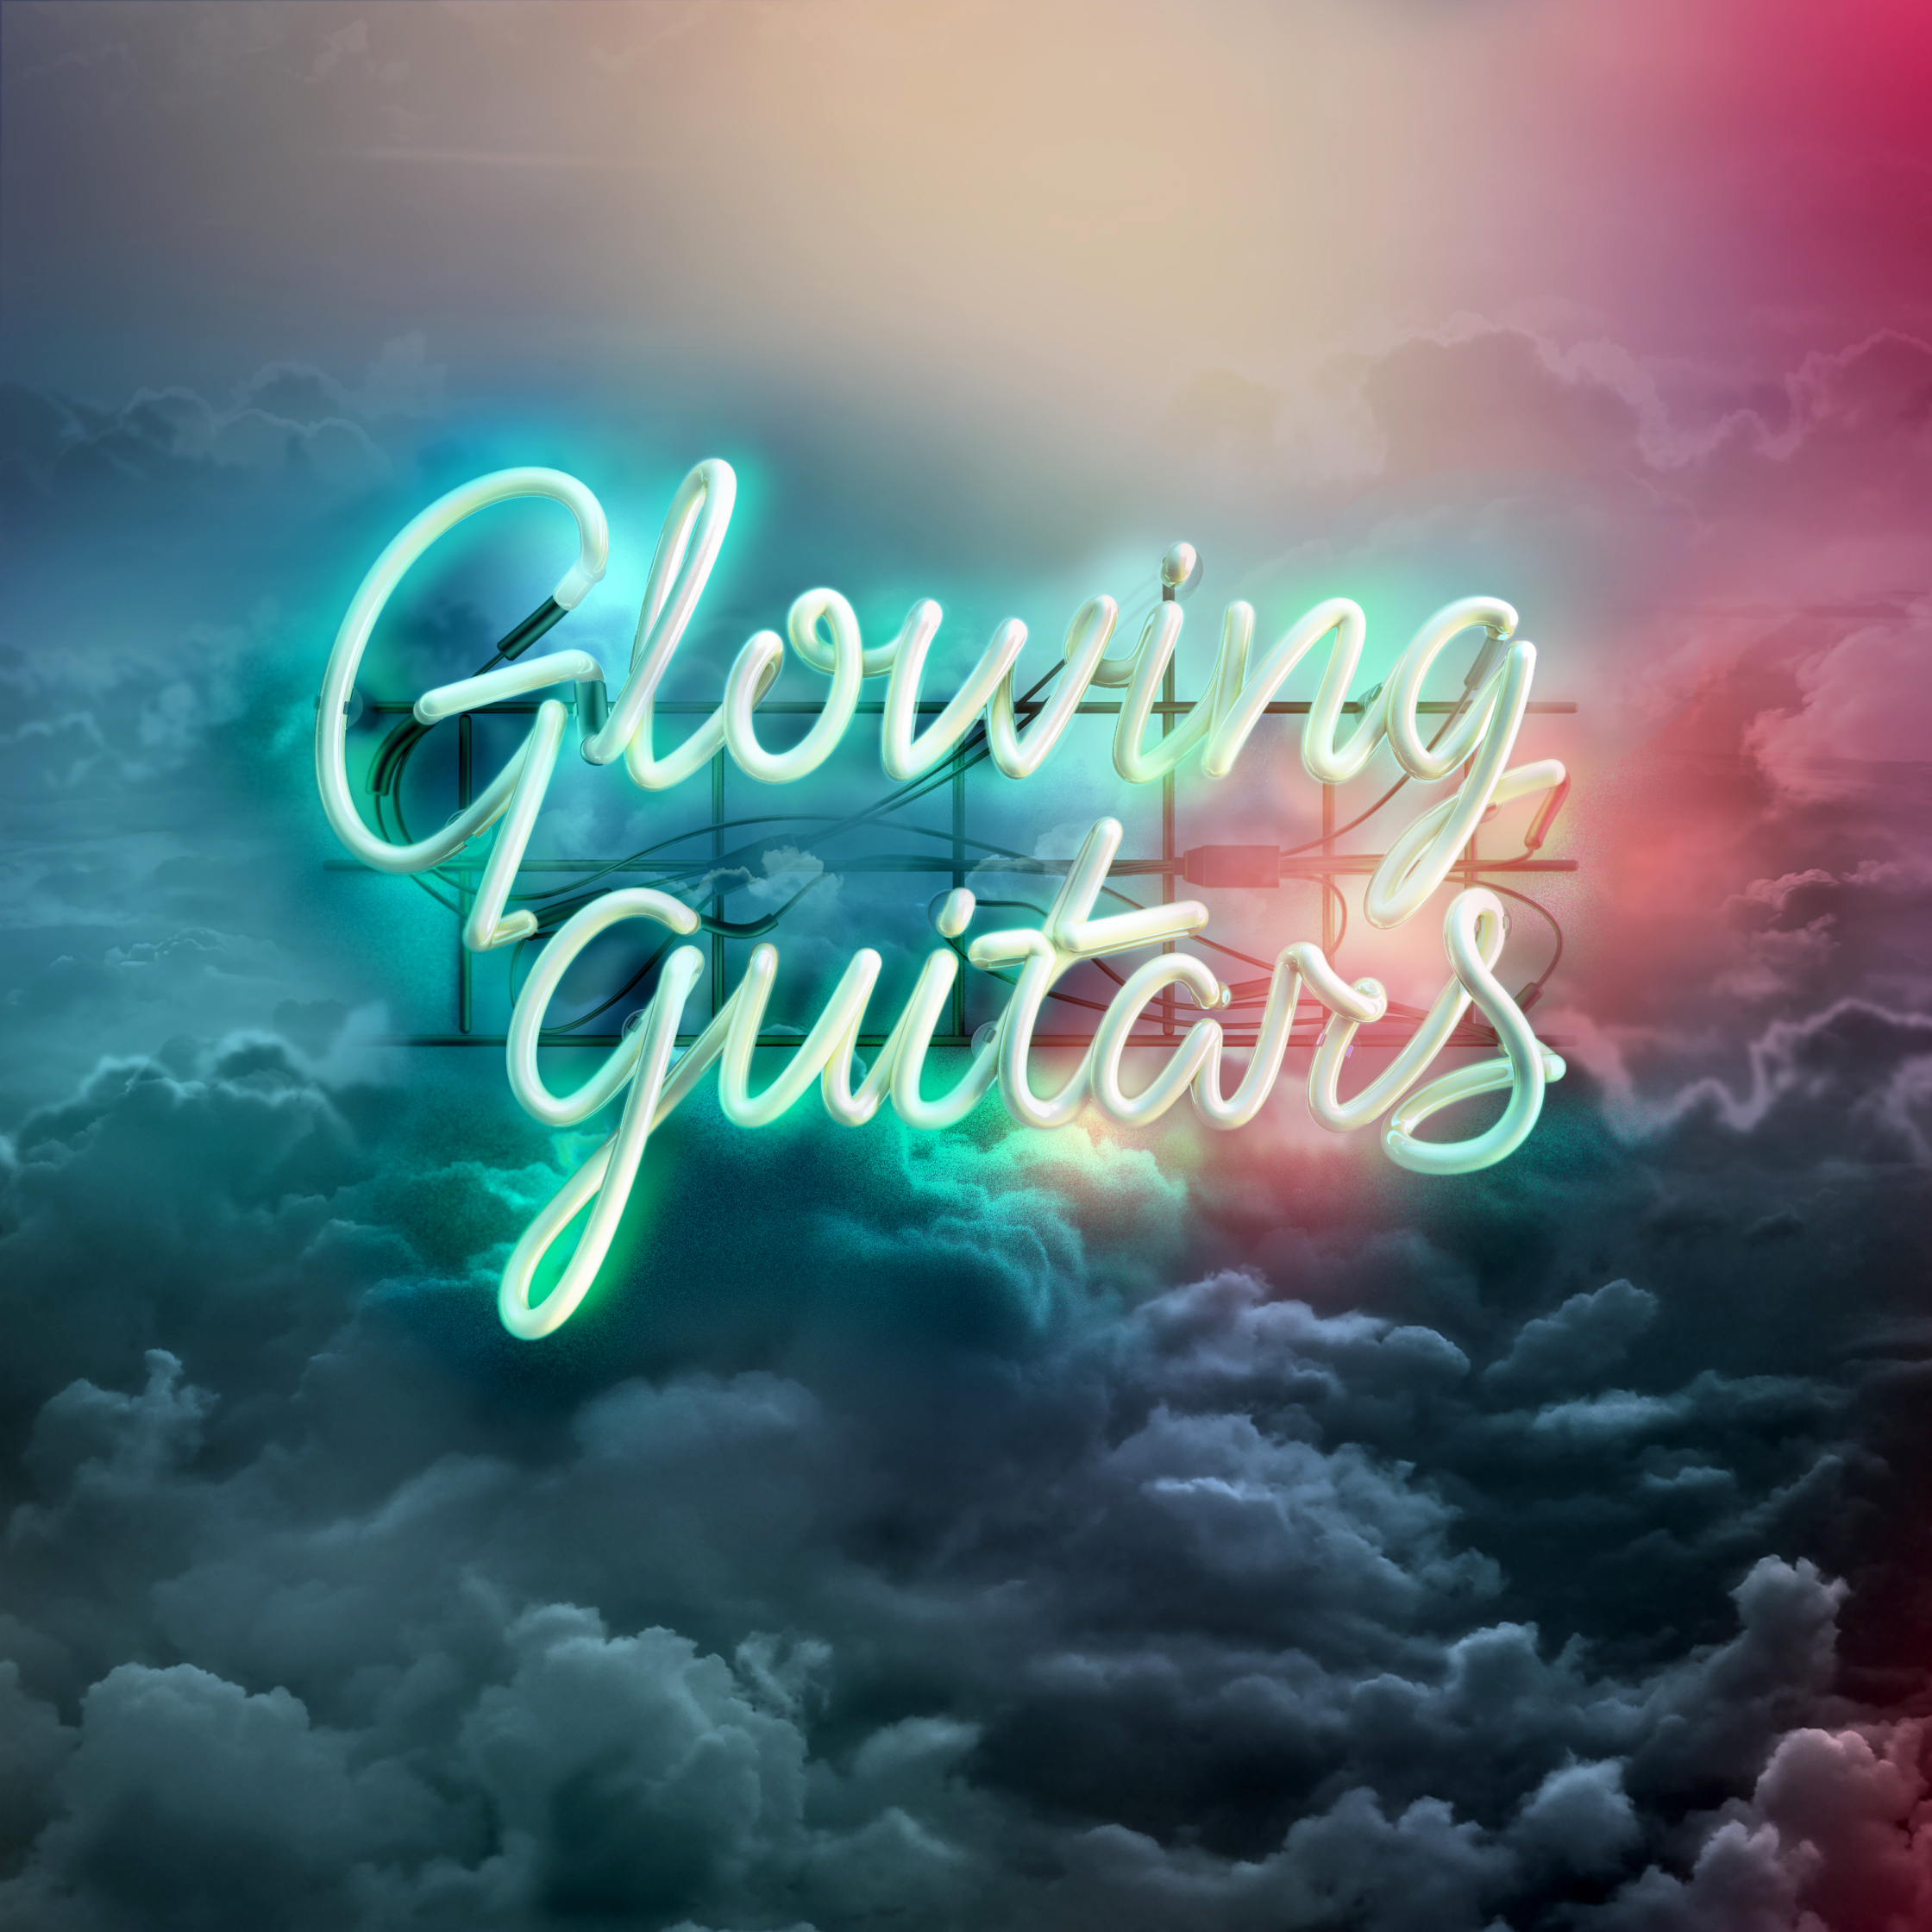 Final Glowing Guitars just image.jpg